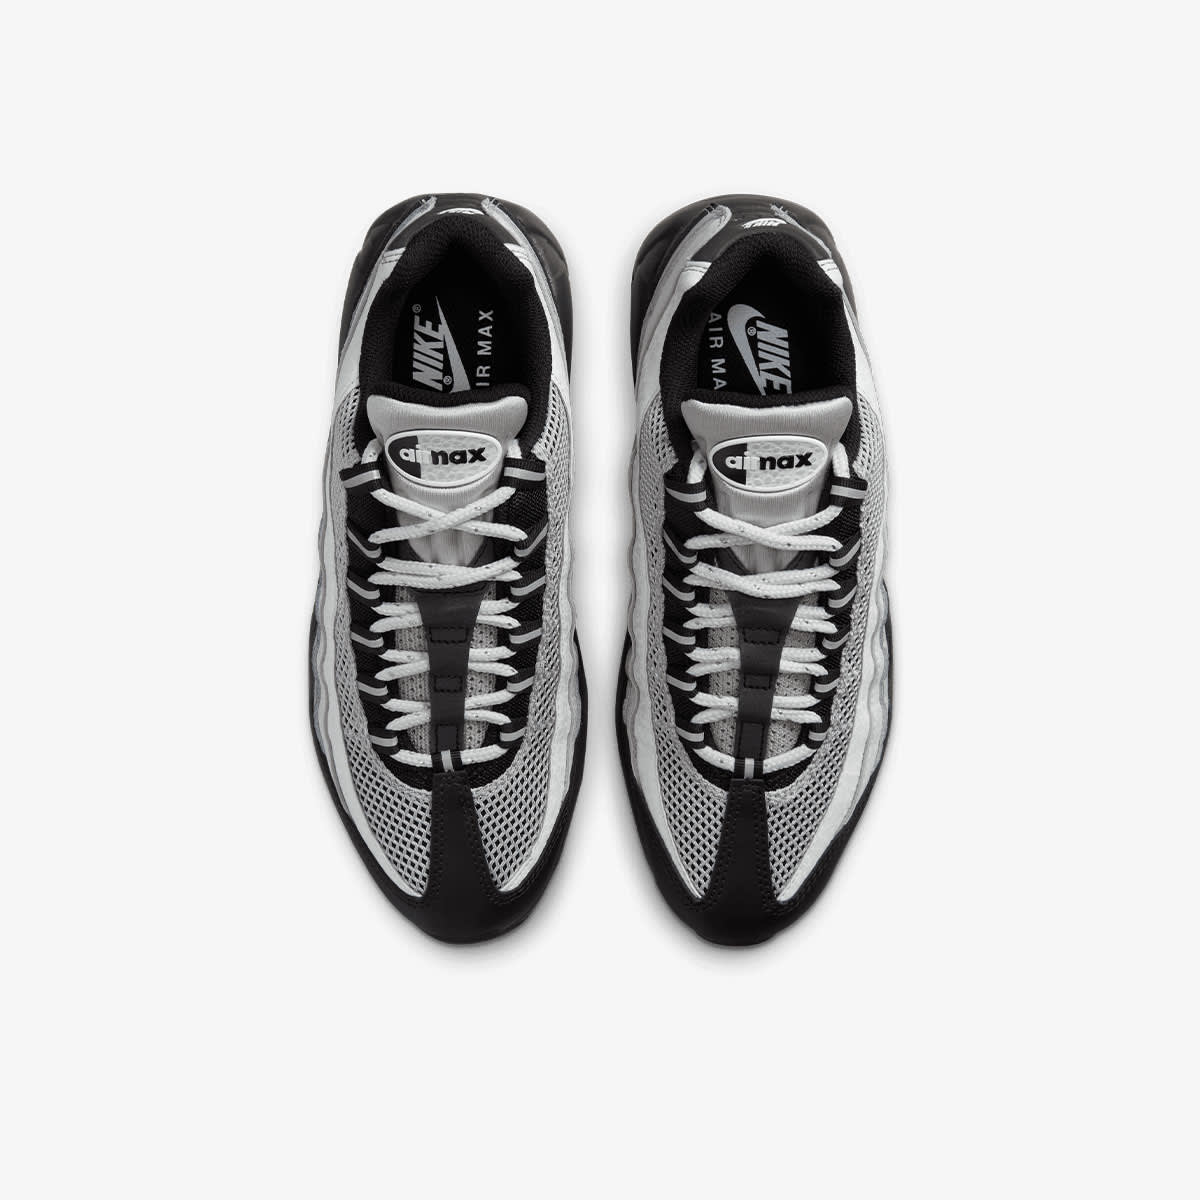 Nike Air Max 95 LX W (Light Smoke Grey & Black) | END. Launches